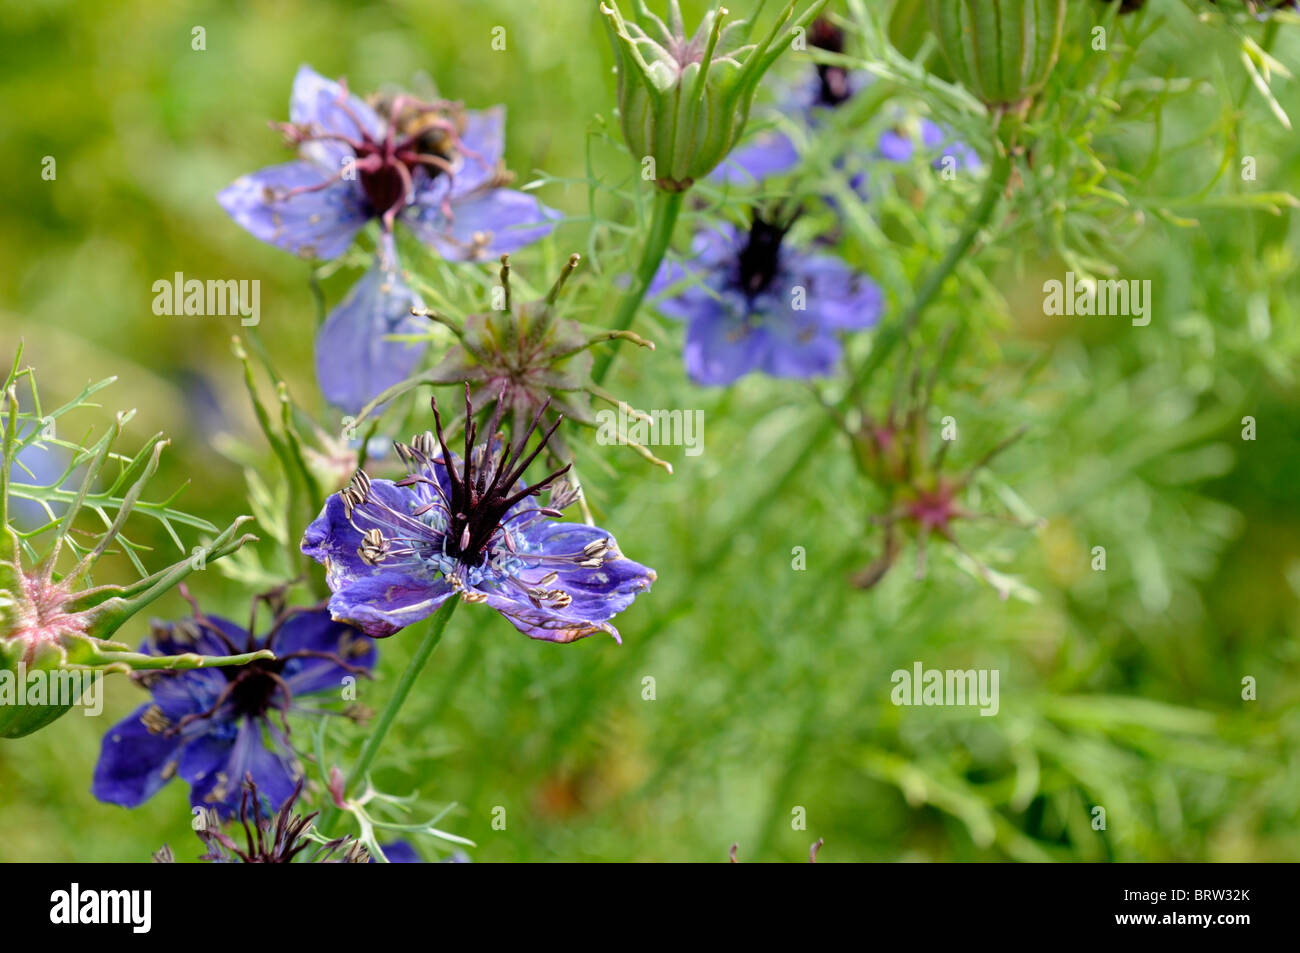 Nigella hispanica papillosa Love-in-a-mist fennel flower blue bloom blossom hardy annual bedding plant Stock Photo